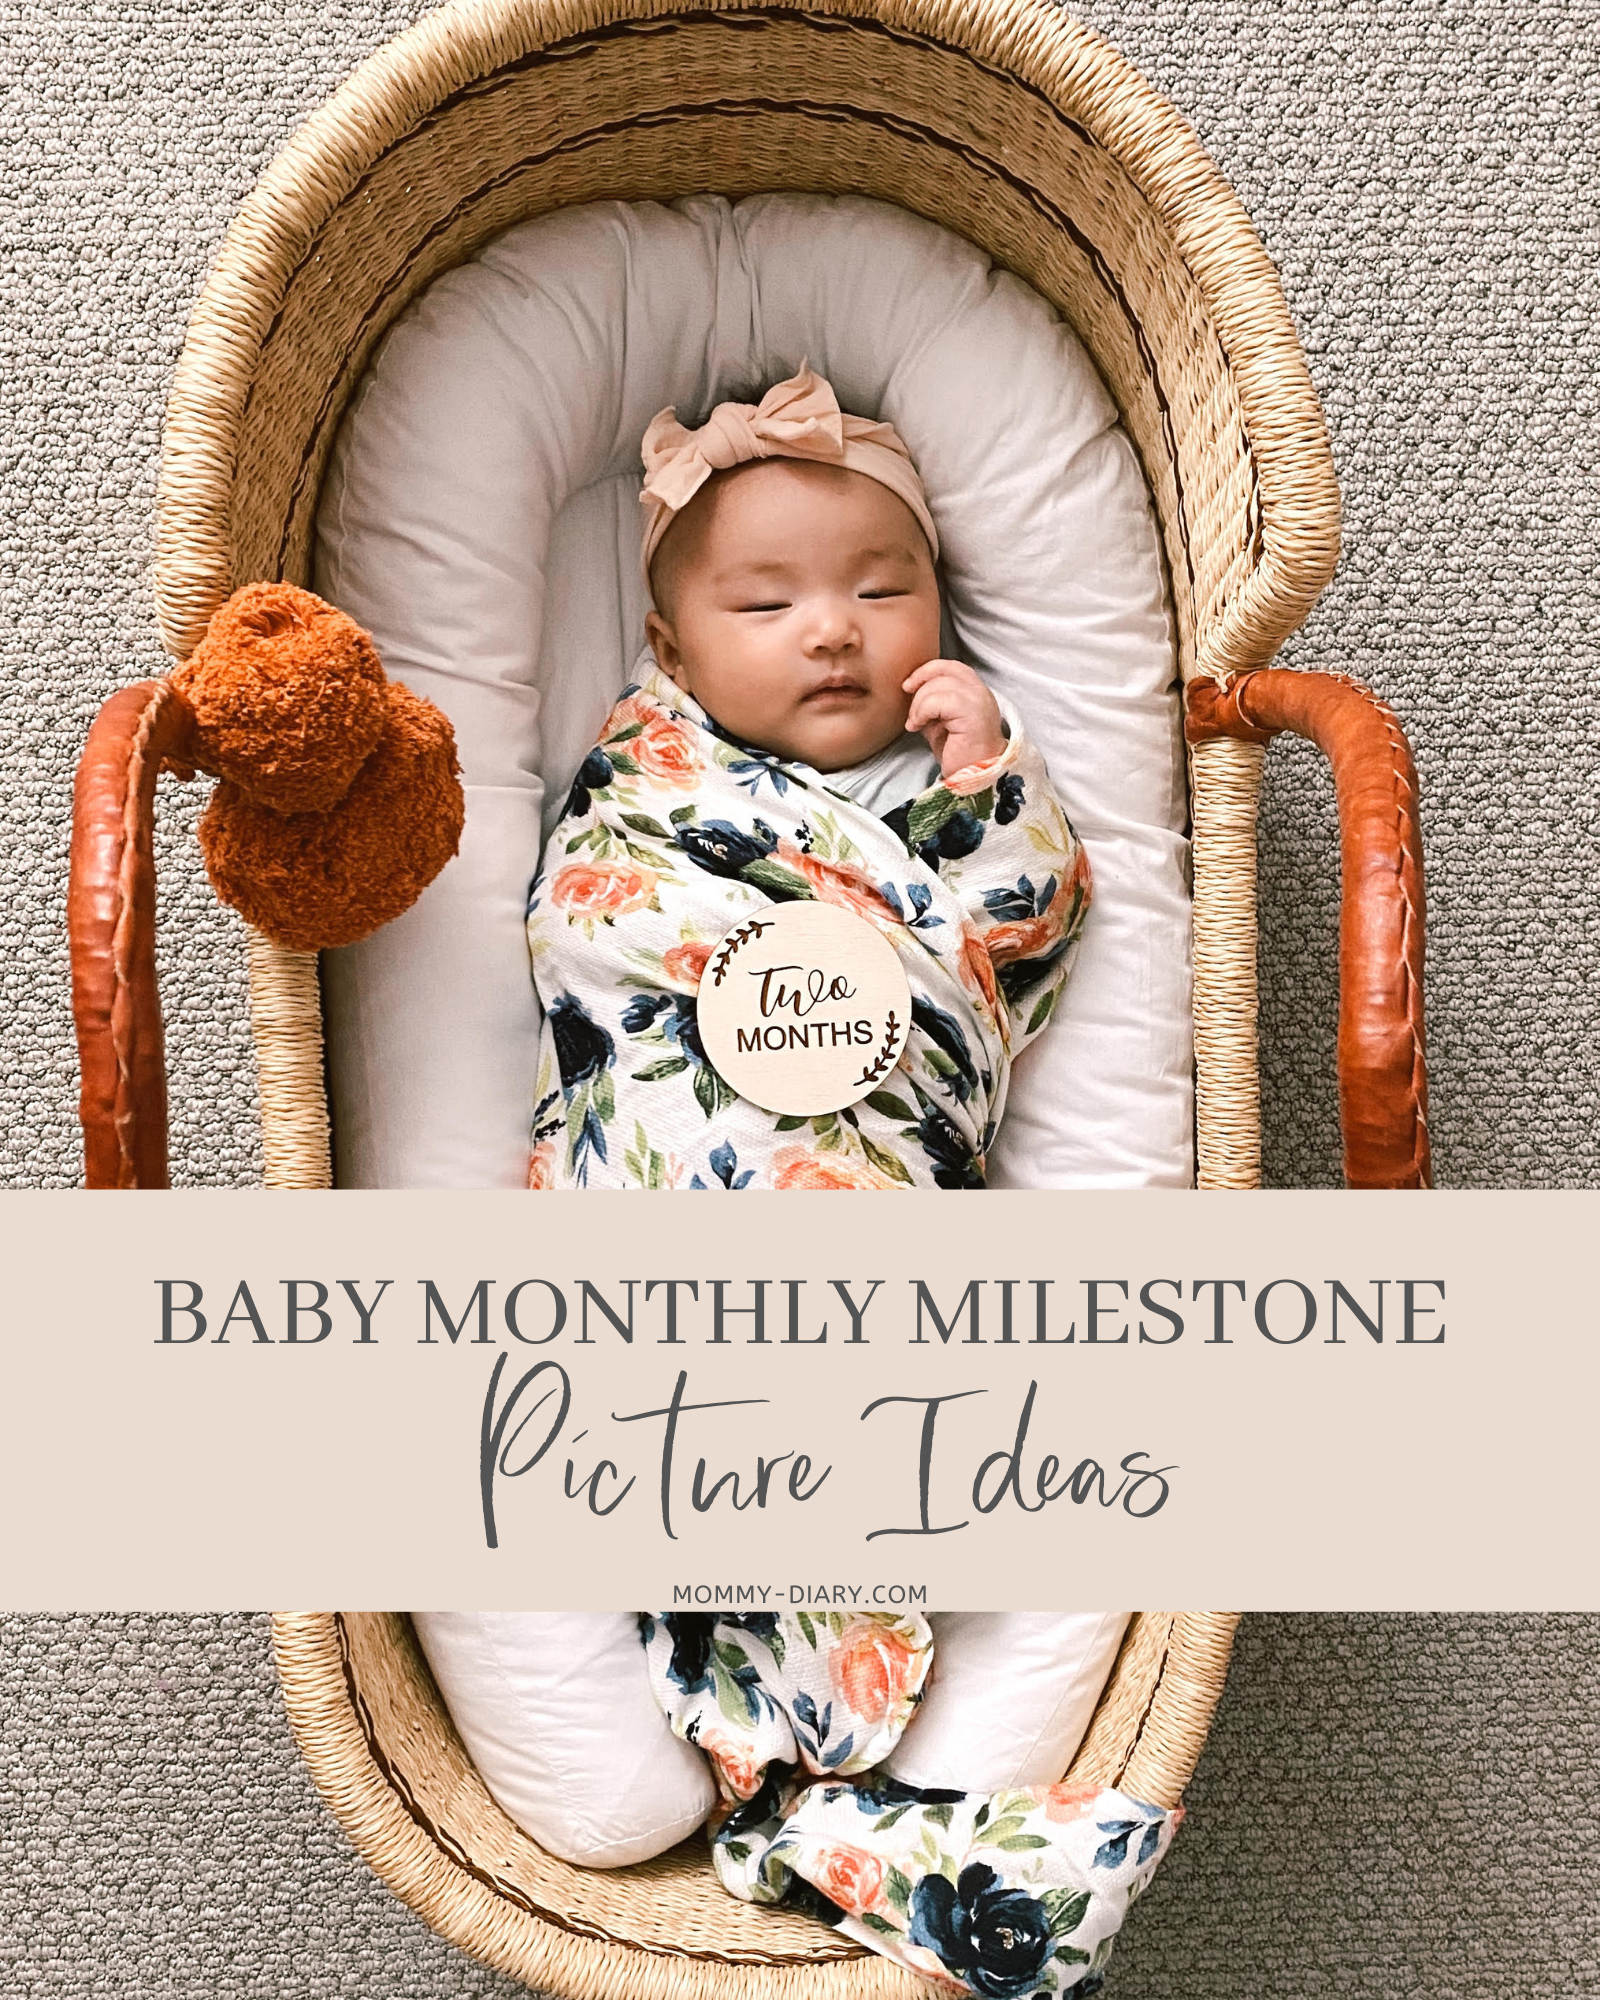 Baby Monthly Milestone Picture Ideas